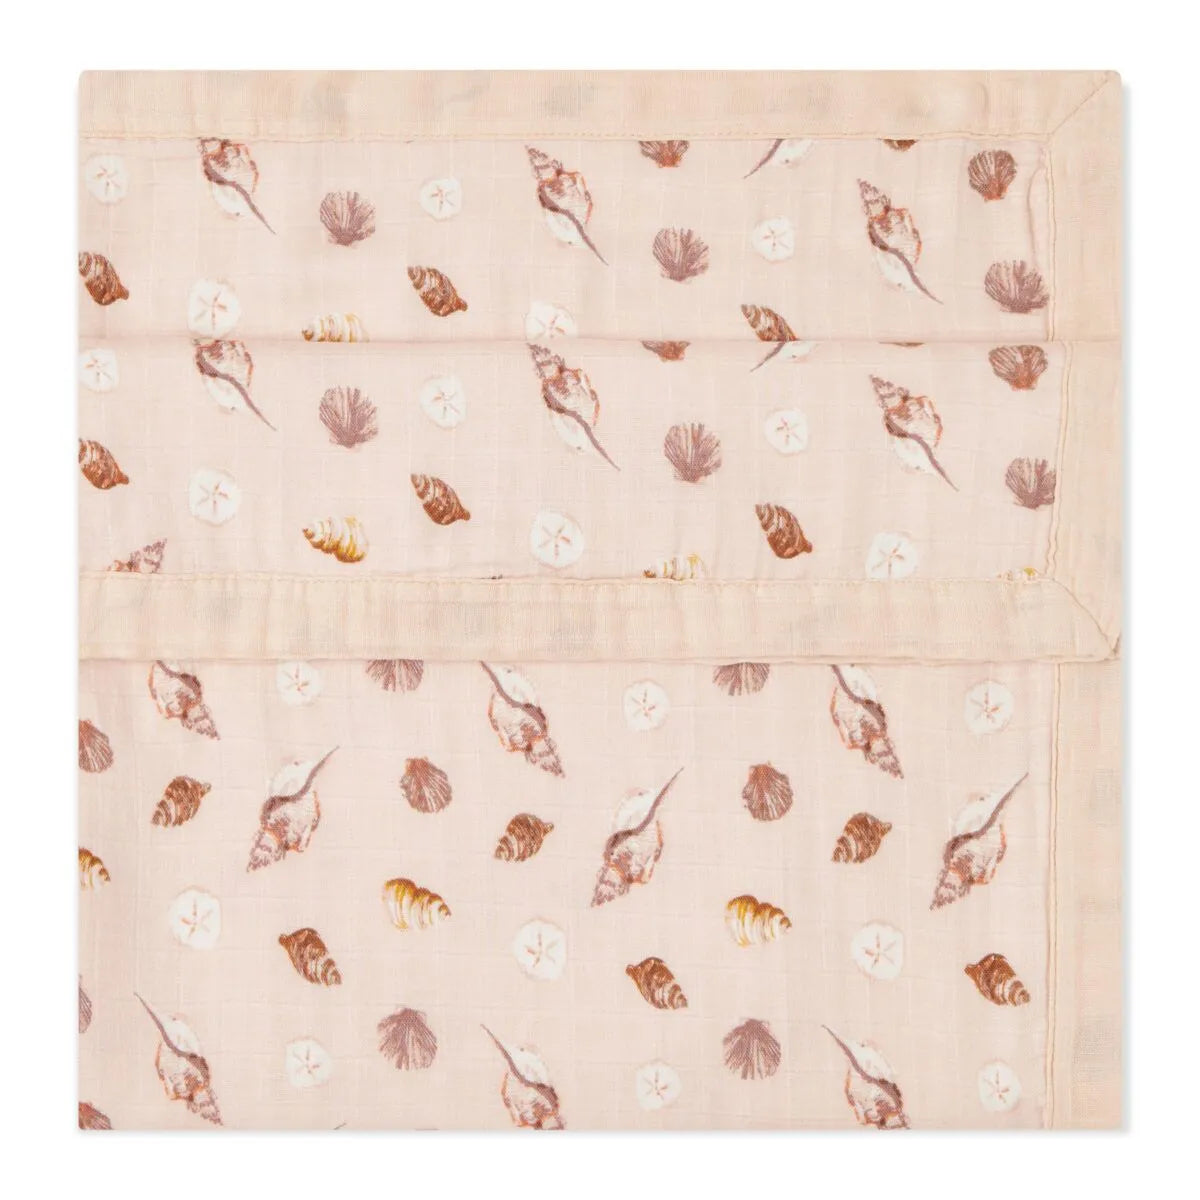 Milkbarn - Three Layer Blanket - Seashells